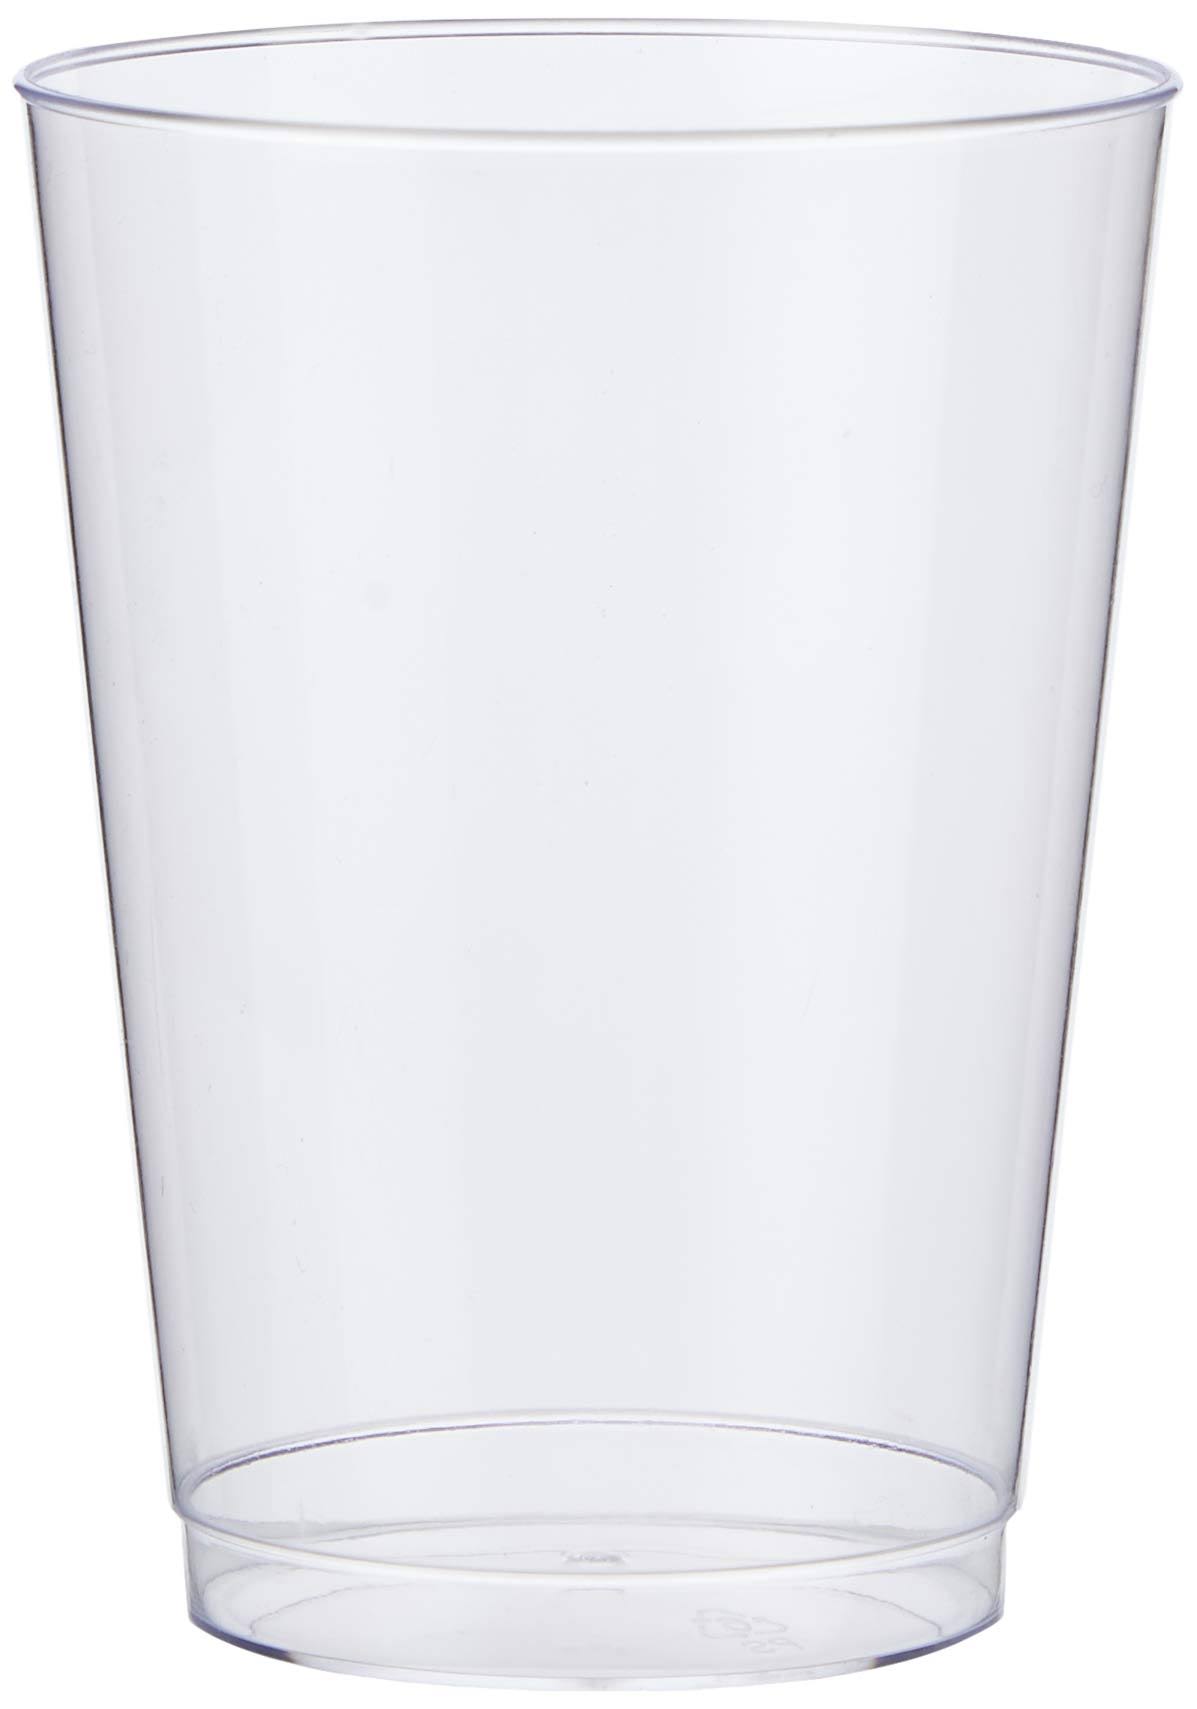 Kingfisher Plastic Spirit Glasses - Clear, 8pk